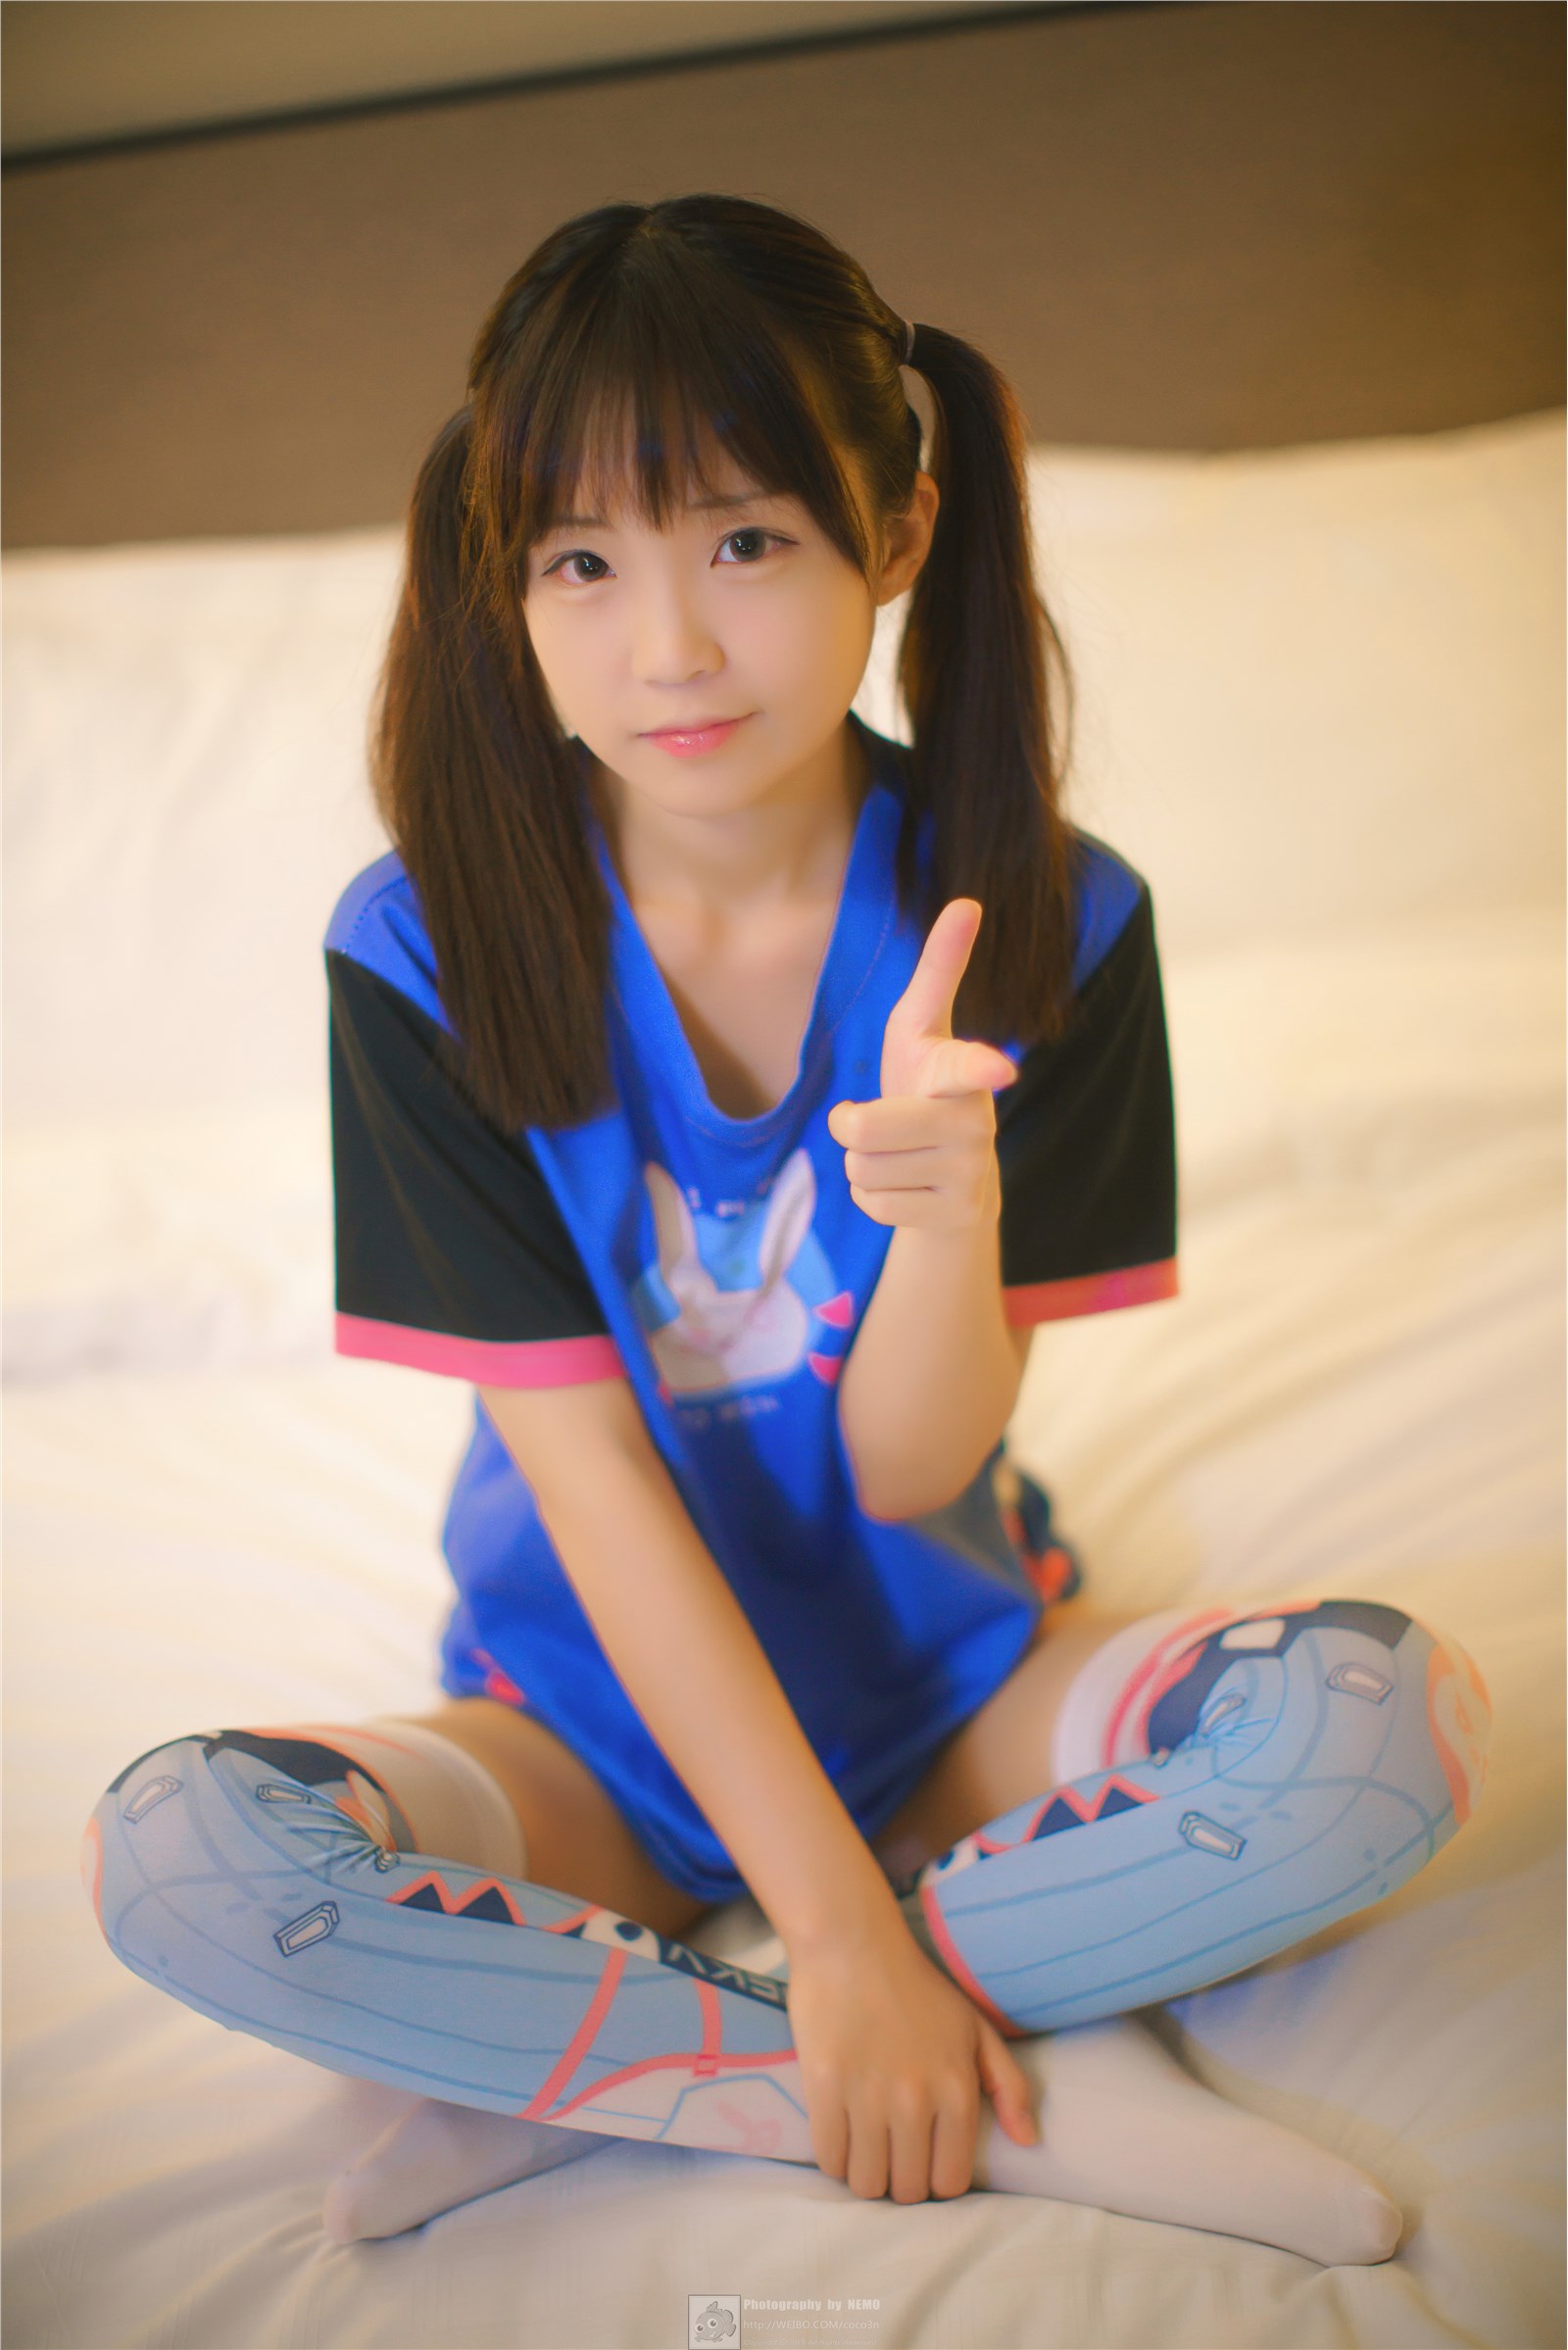 Yumiko gymnastic outfit(27)